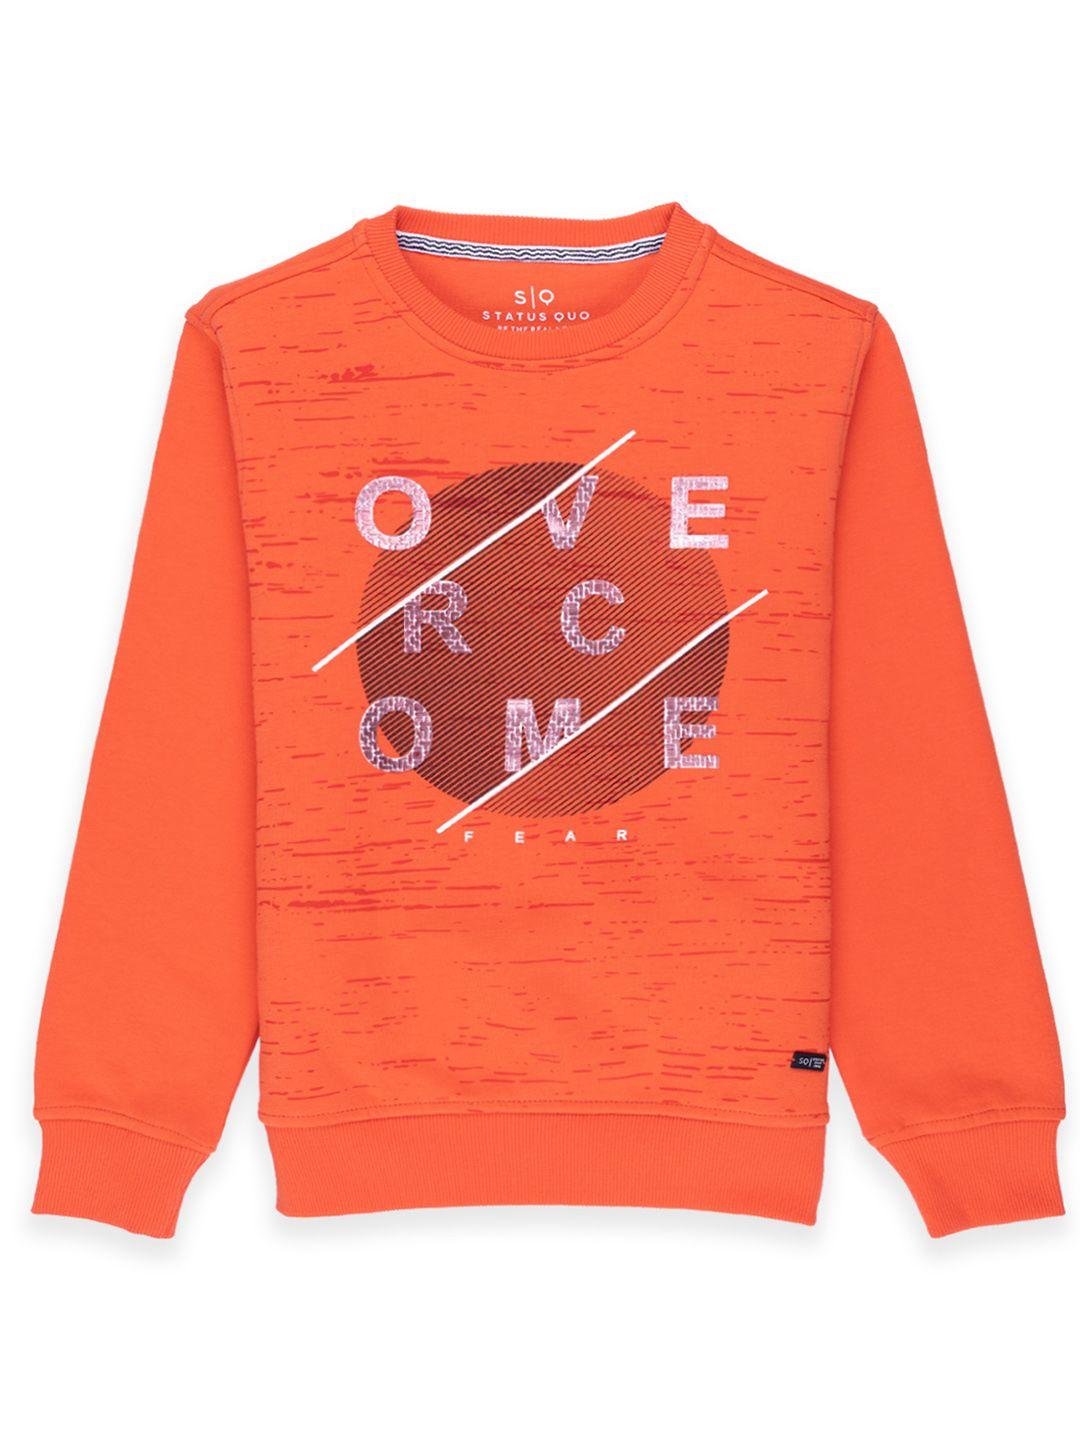 status quo boys orange printed cotton round neck sweatshirt